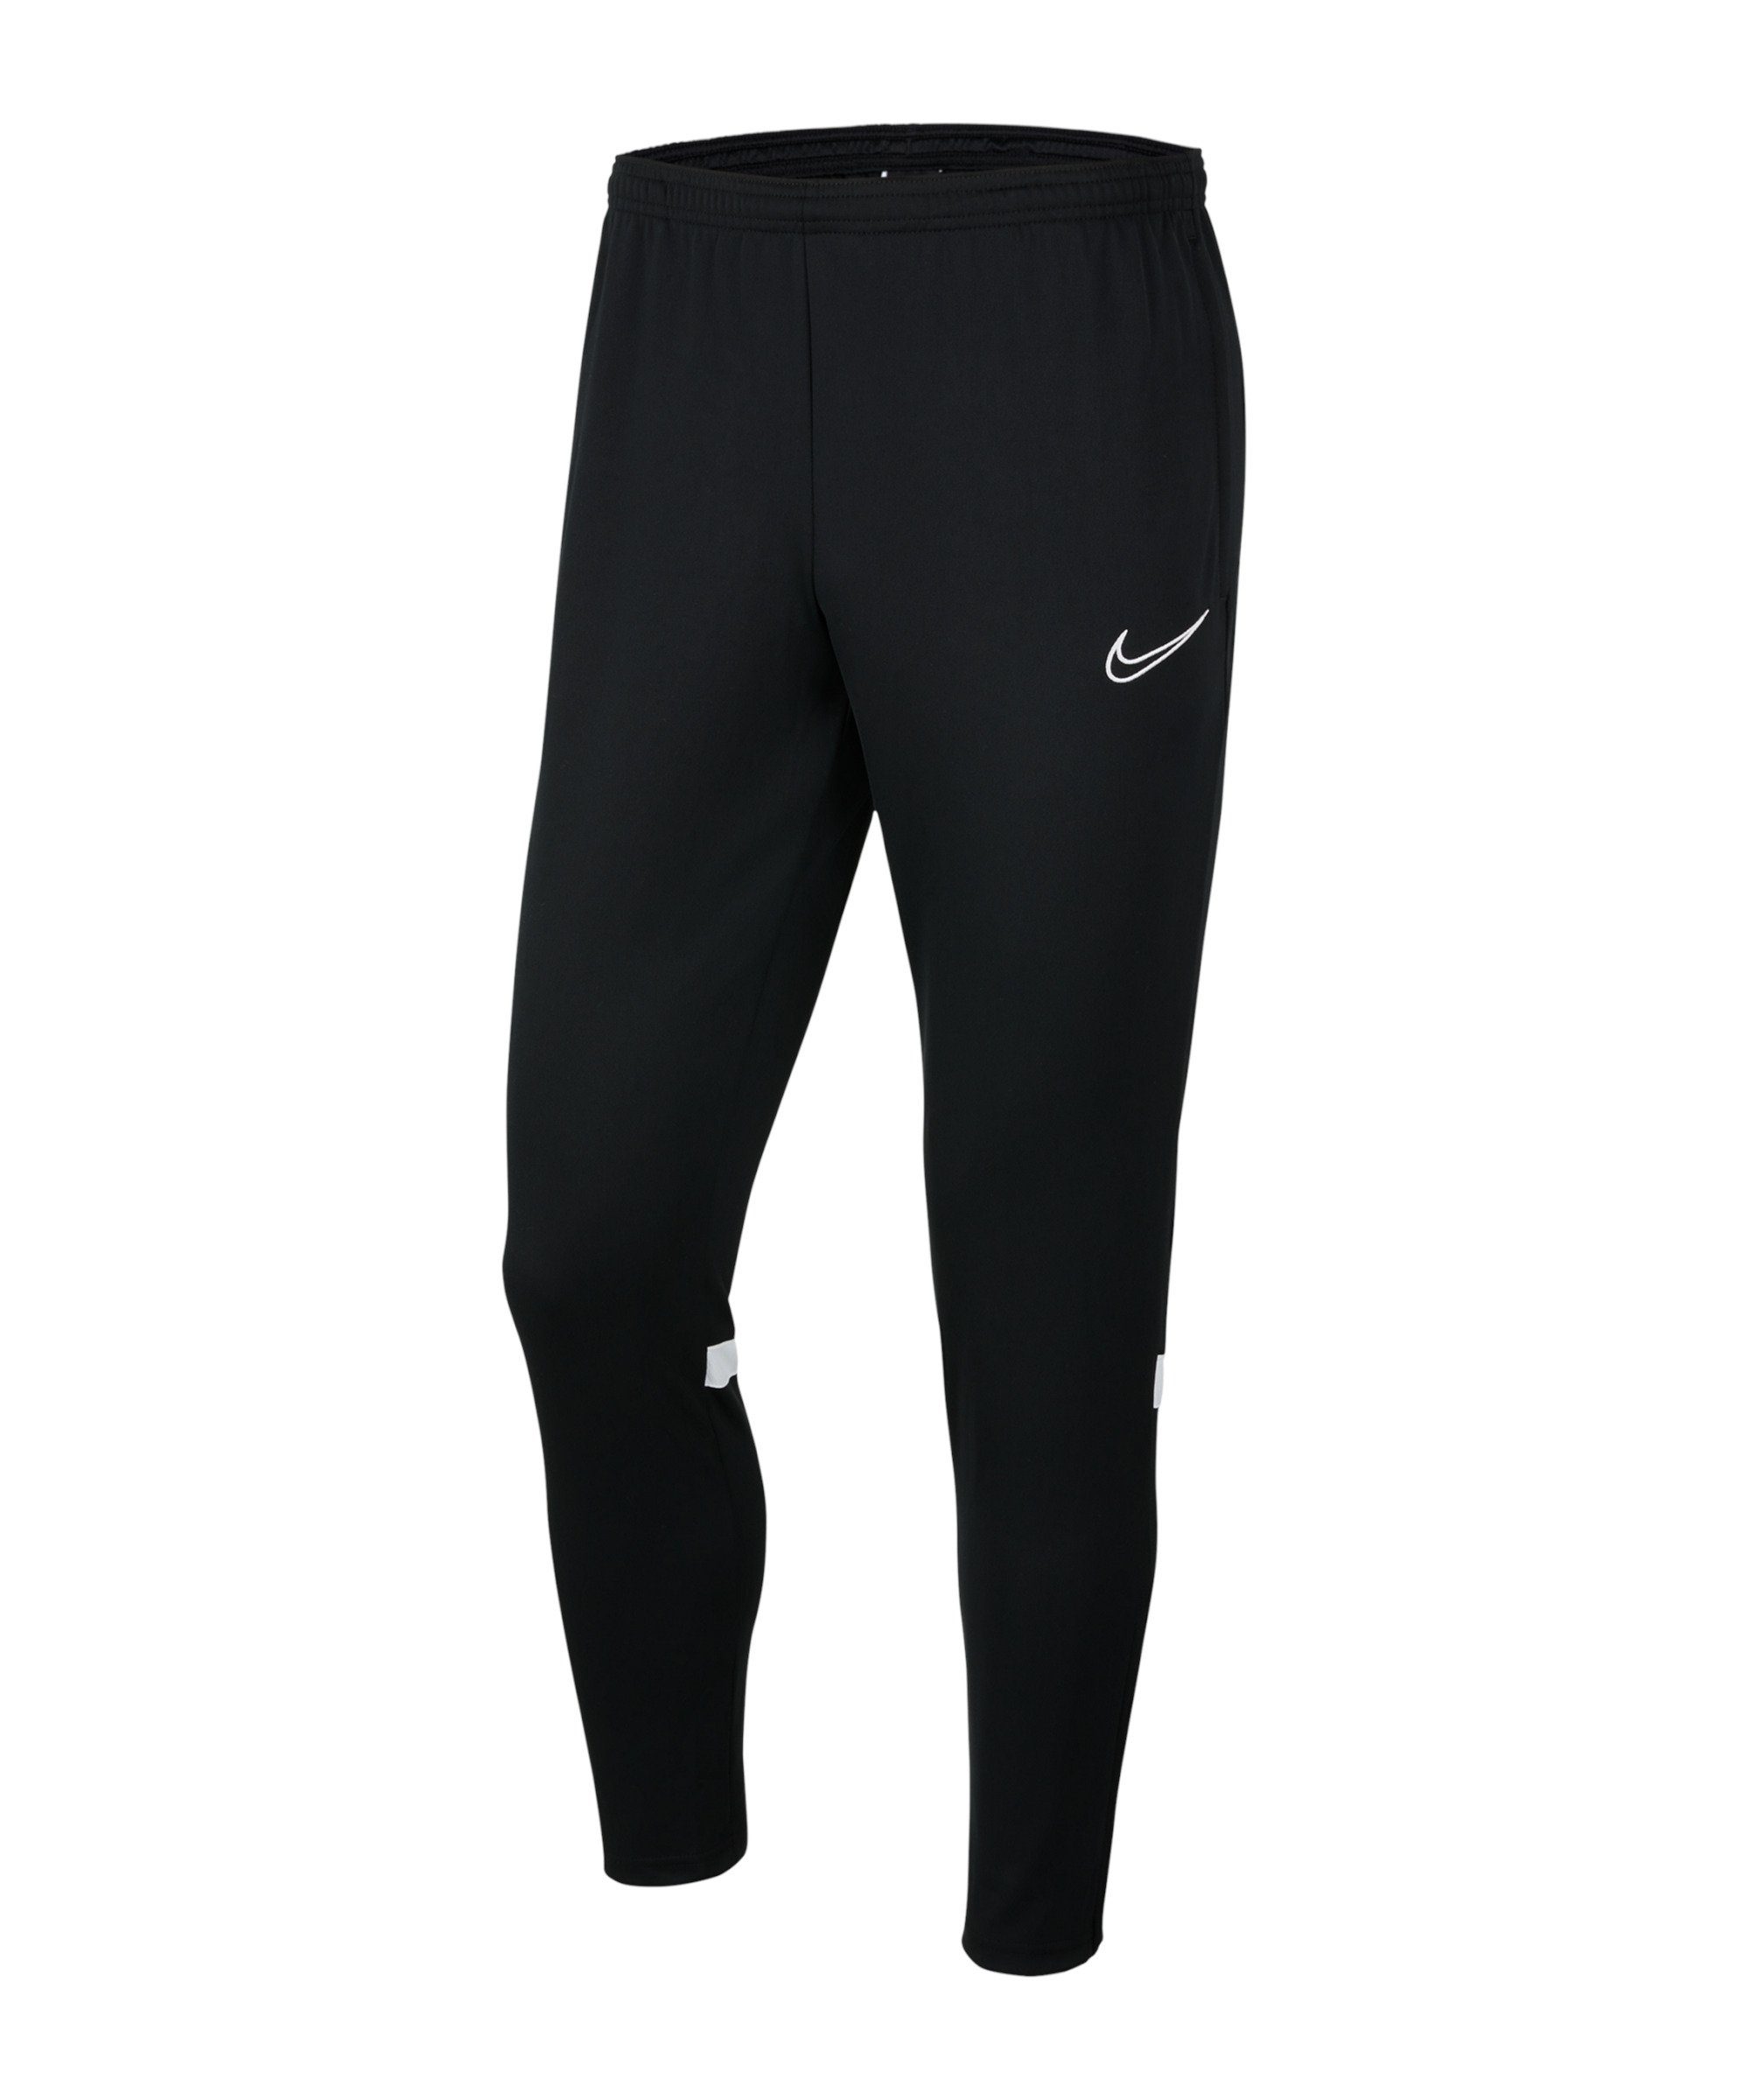 [Beliebtes neues Produkt!] Nike Sporthose Academy 21 Trainingshose schwarzweiss Kids